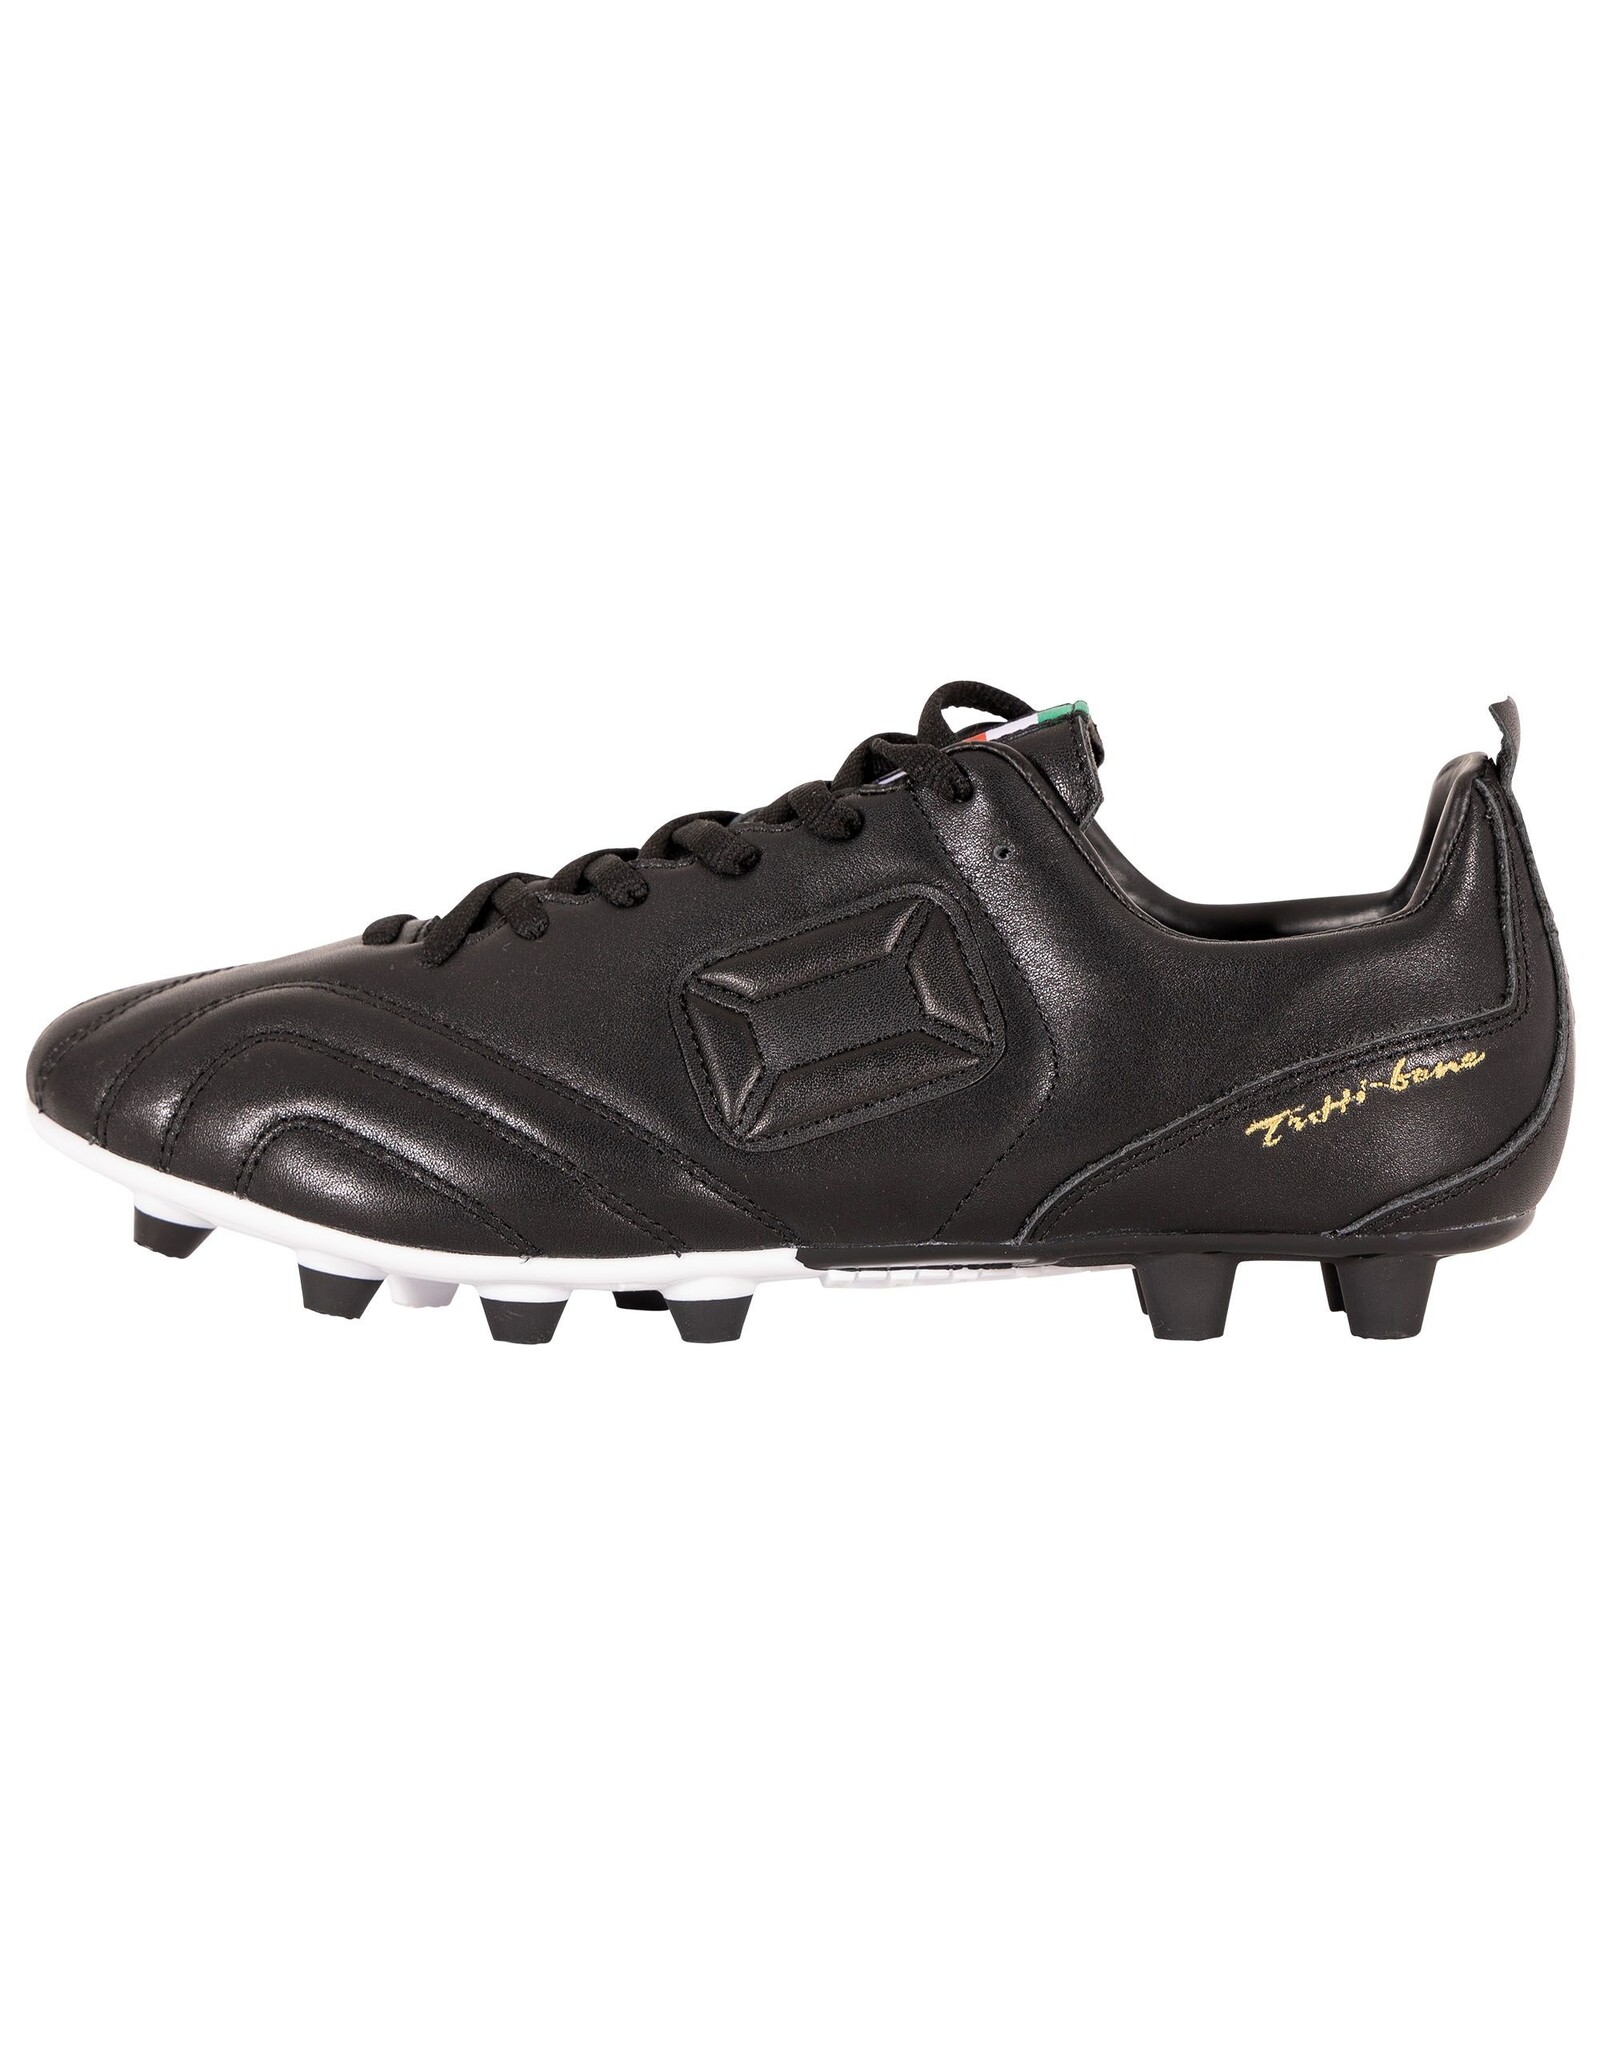 Stanno Nibbio Nero Ultra Firm Ground Football Shoes-Black